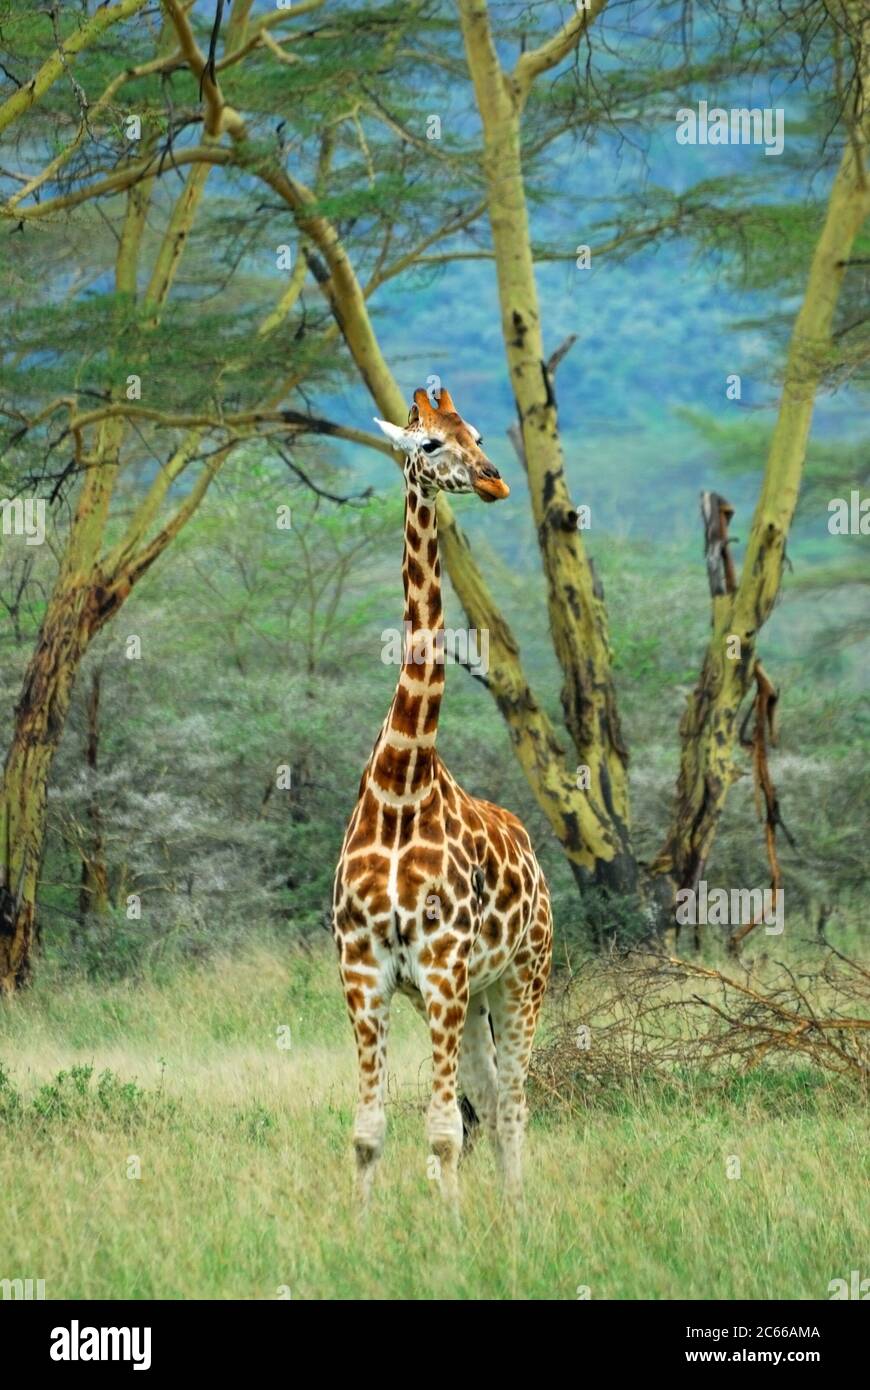 giraffe racing